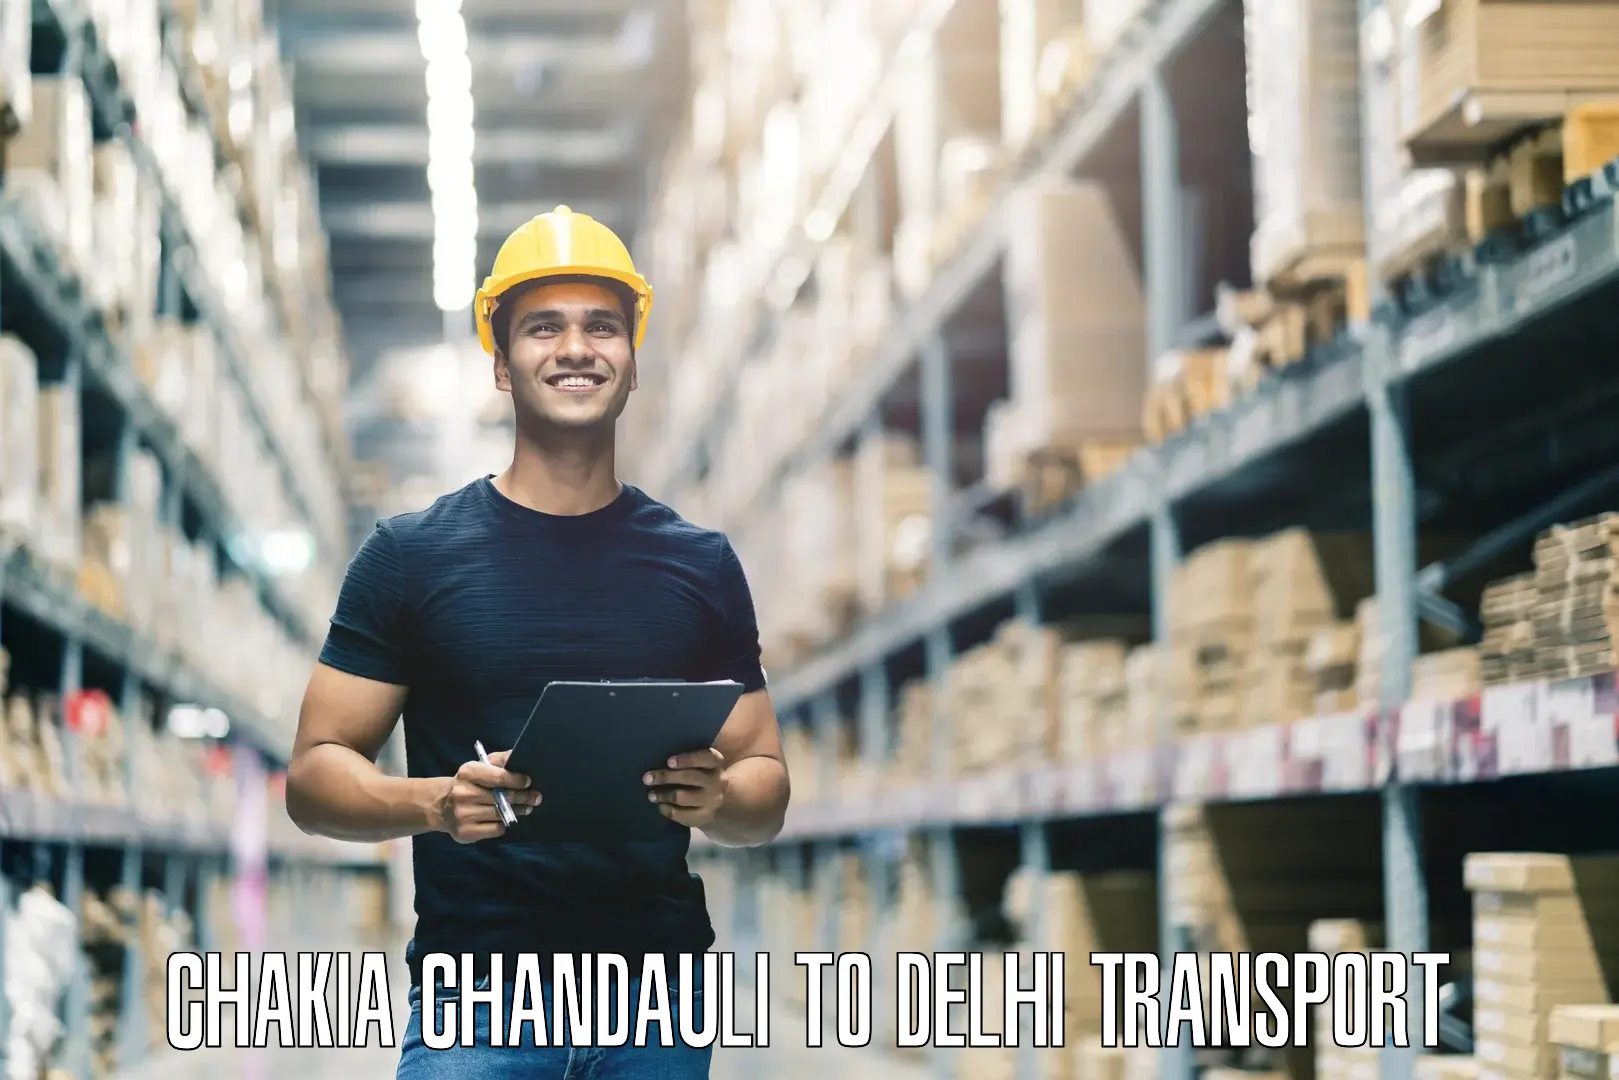 Nearby transport service Chakia Chandauli to Delhi